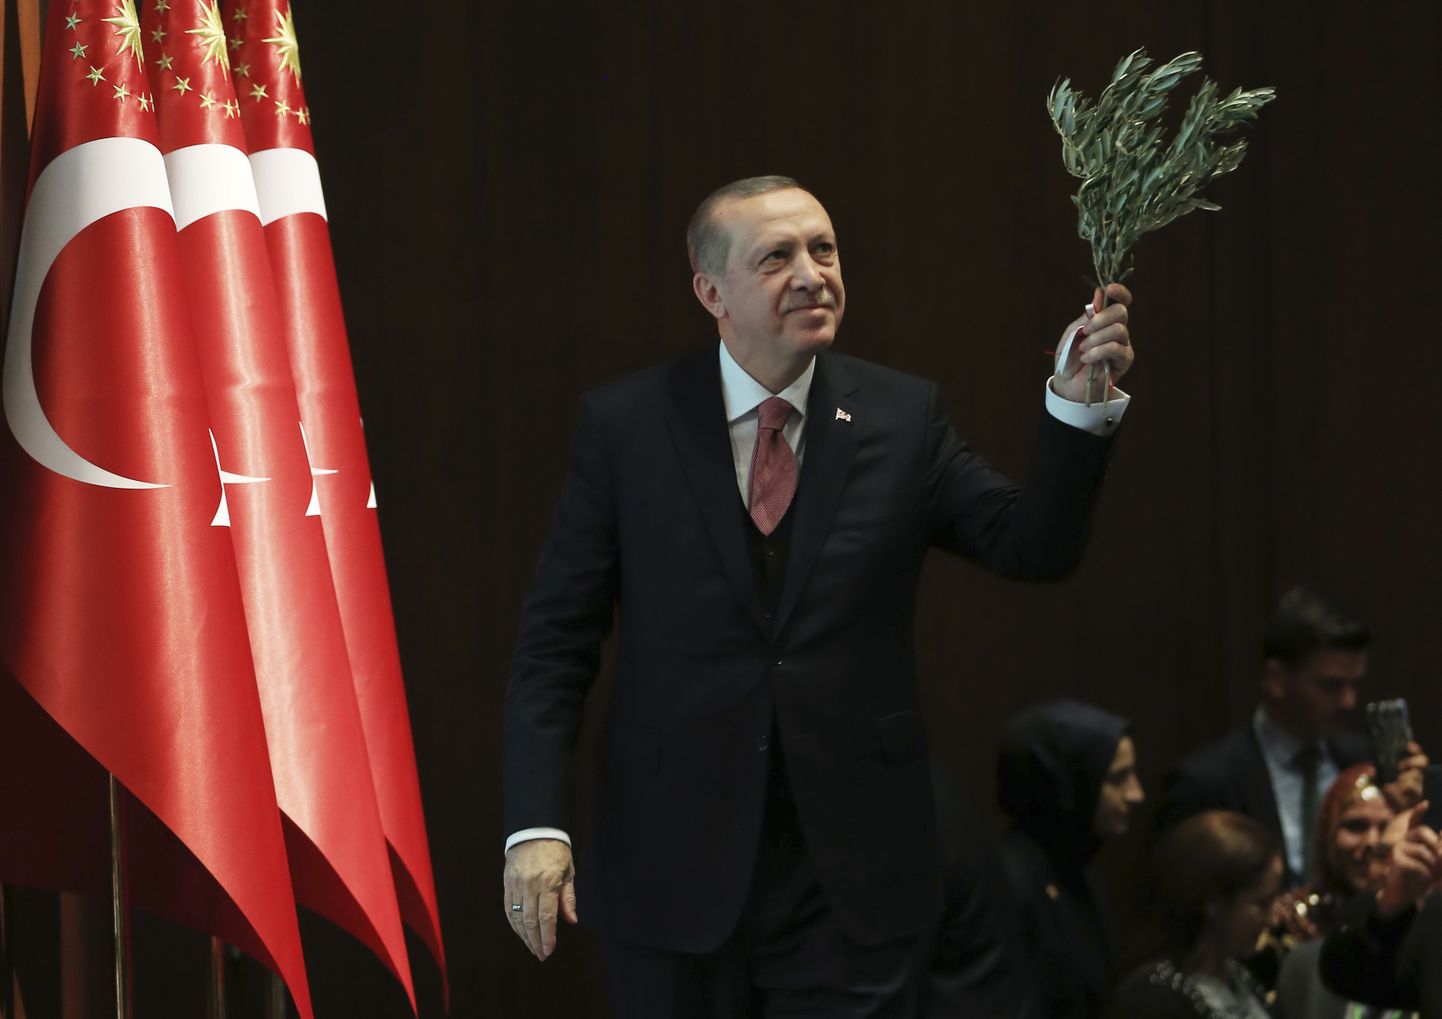 Türgi president Recep Tayyip Erdoğan viisastakuplaani kõne pidamas.